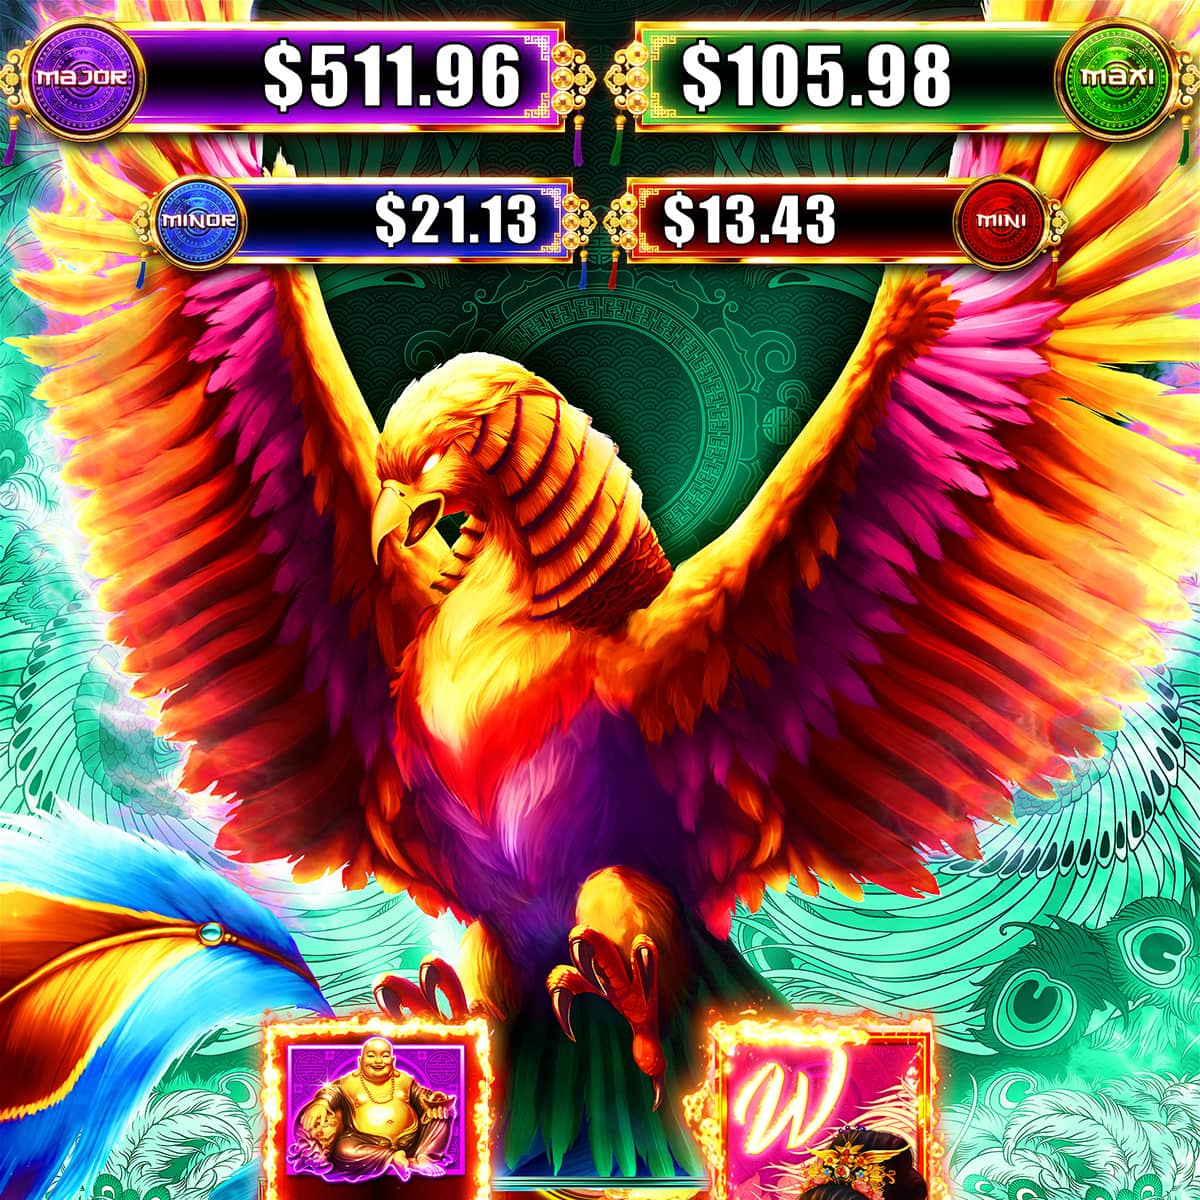 Phoenix Character Image And Jackpot Listings screen